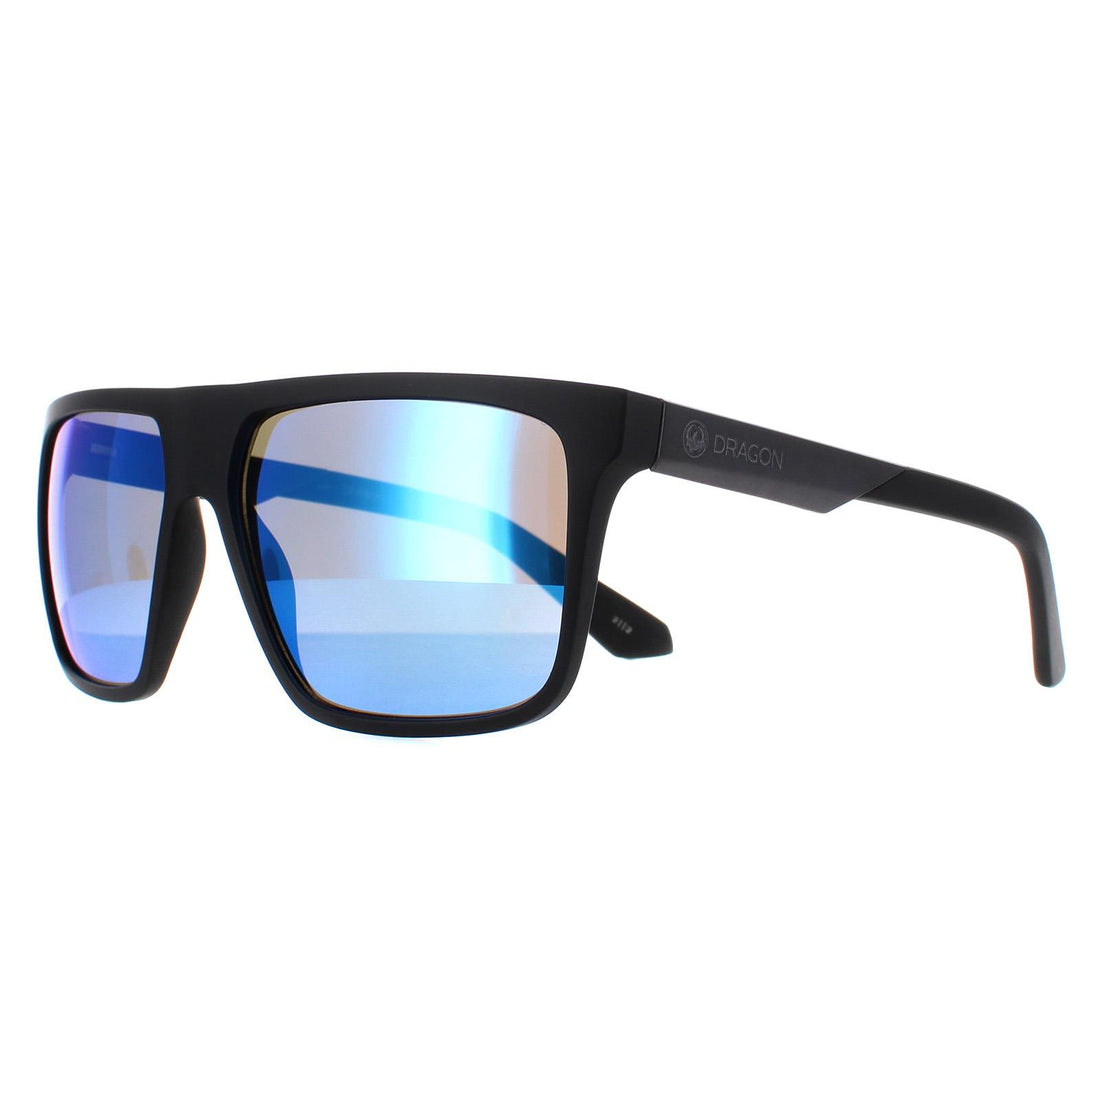 Dragon Sunglasses Vinyl 45037-003 Matte Black Lumalens Blue Ionized